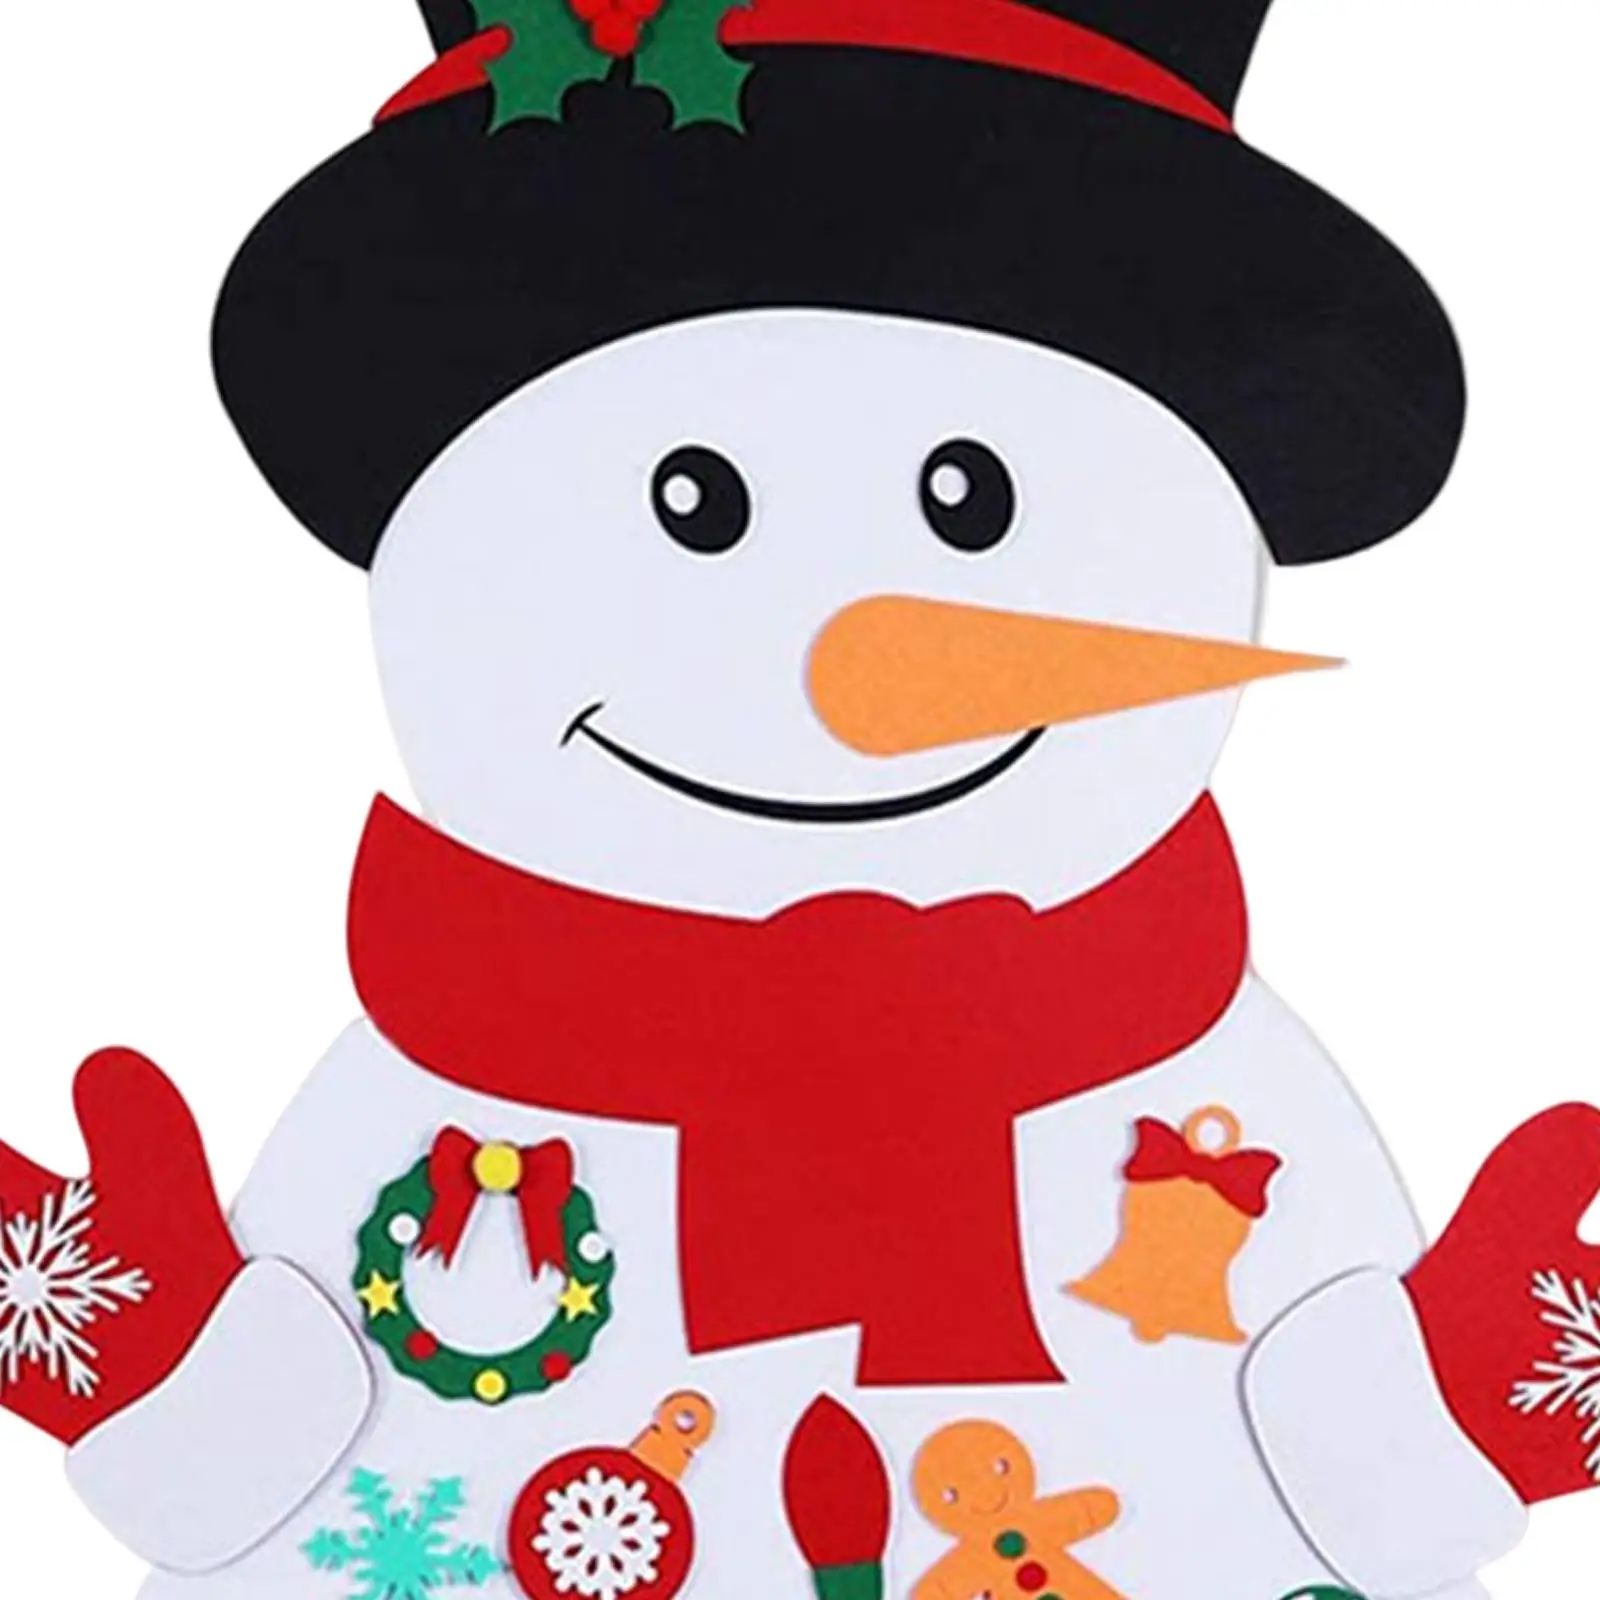 

DIY Felt Snowman Set Wall Hanging Detachable Ornaments, Kids Present Party Supplies, Xmas Home Decorations